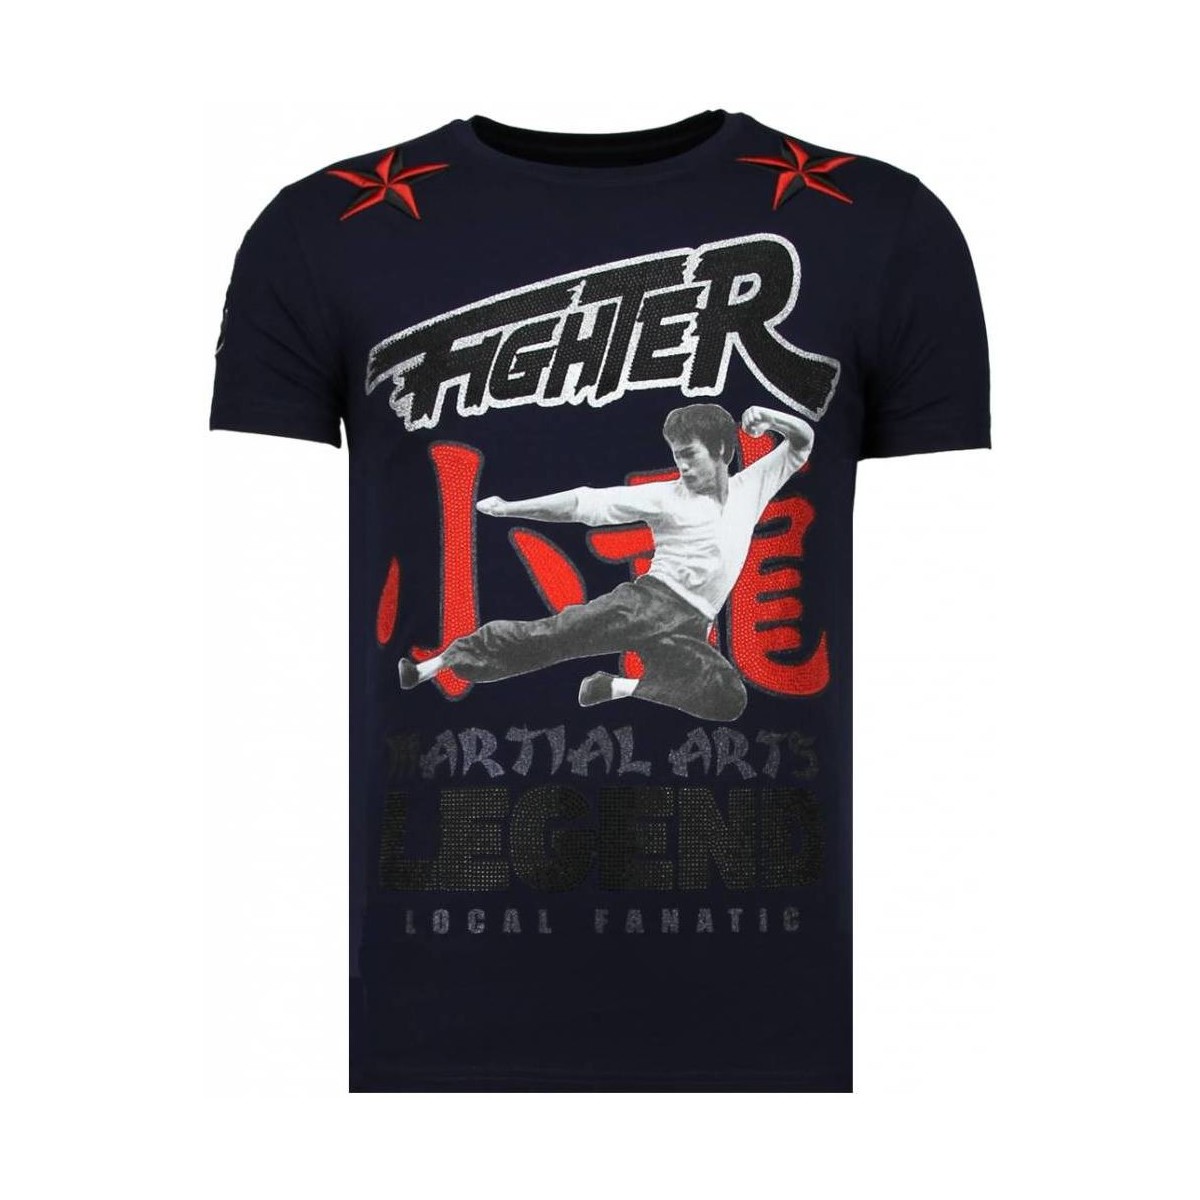 textil Herr T-shirts Local Fanatic Fighter Legend Rhinestone N Blå